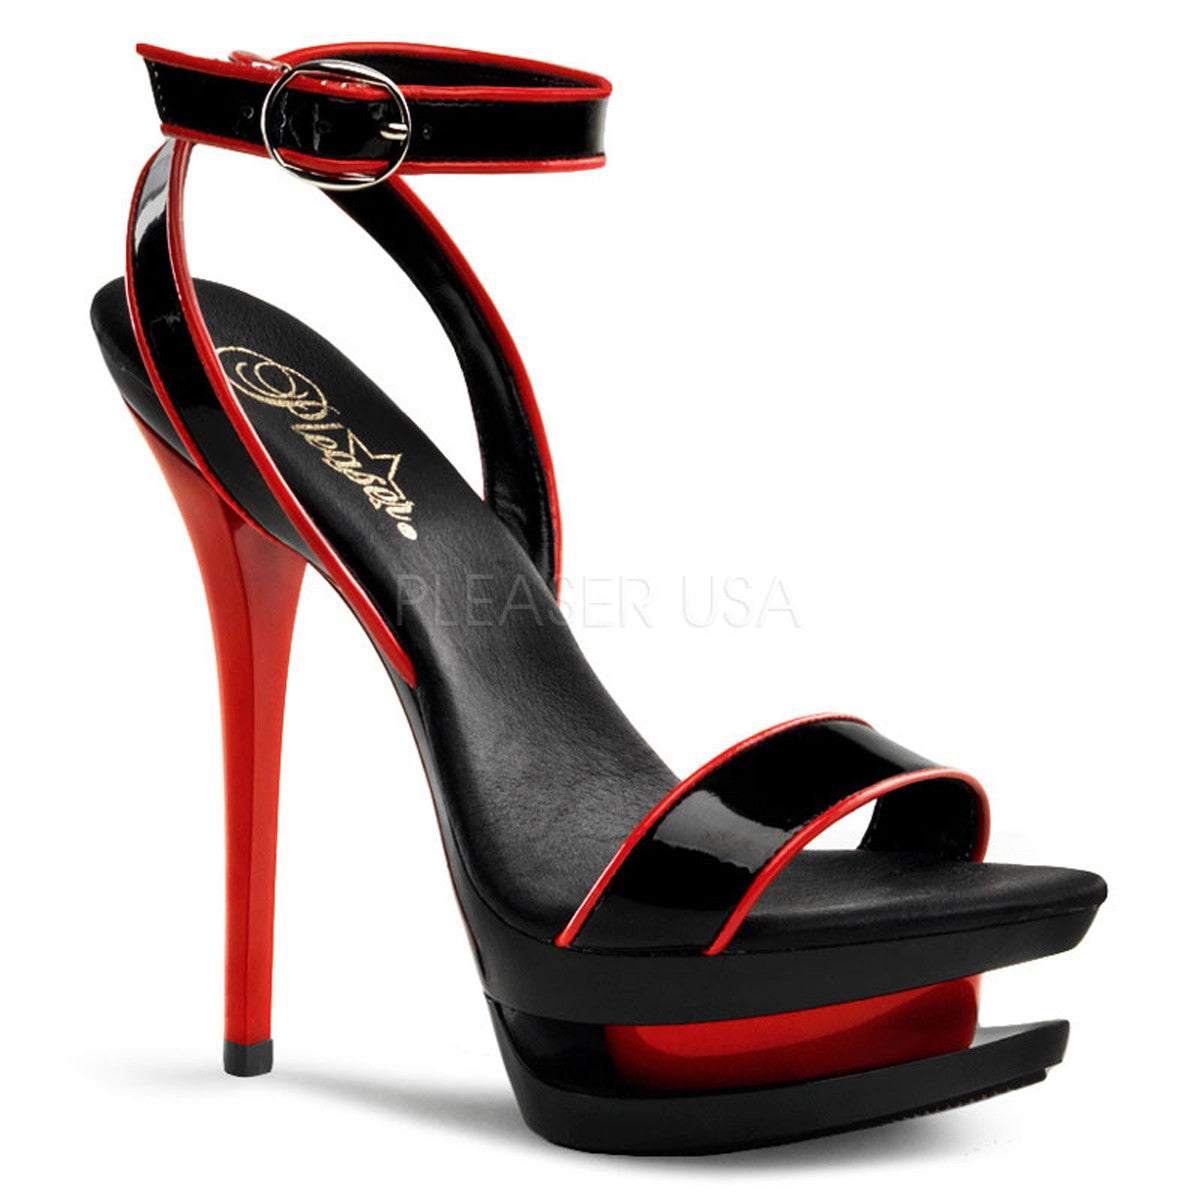 PLEASER BLONDIE-631-2 Black Red Pat-Black-Red Stiletto Sandals - Shoecup.com - 1